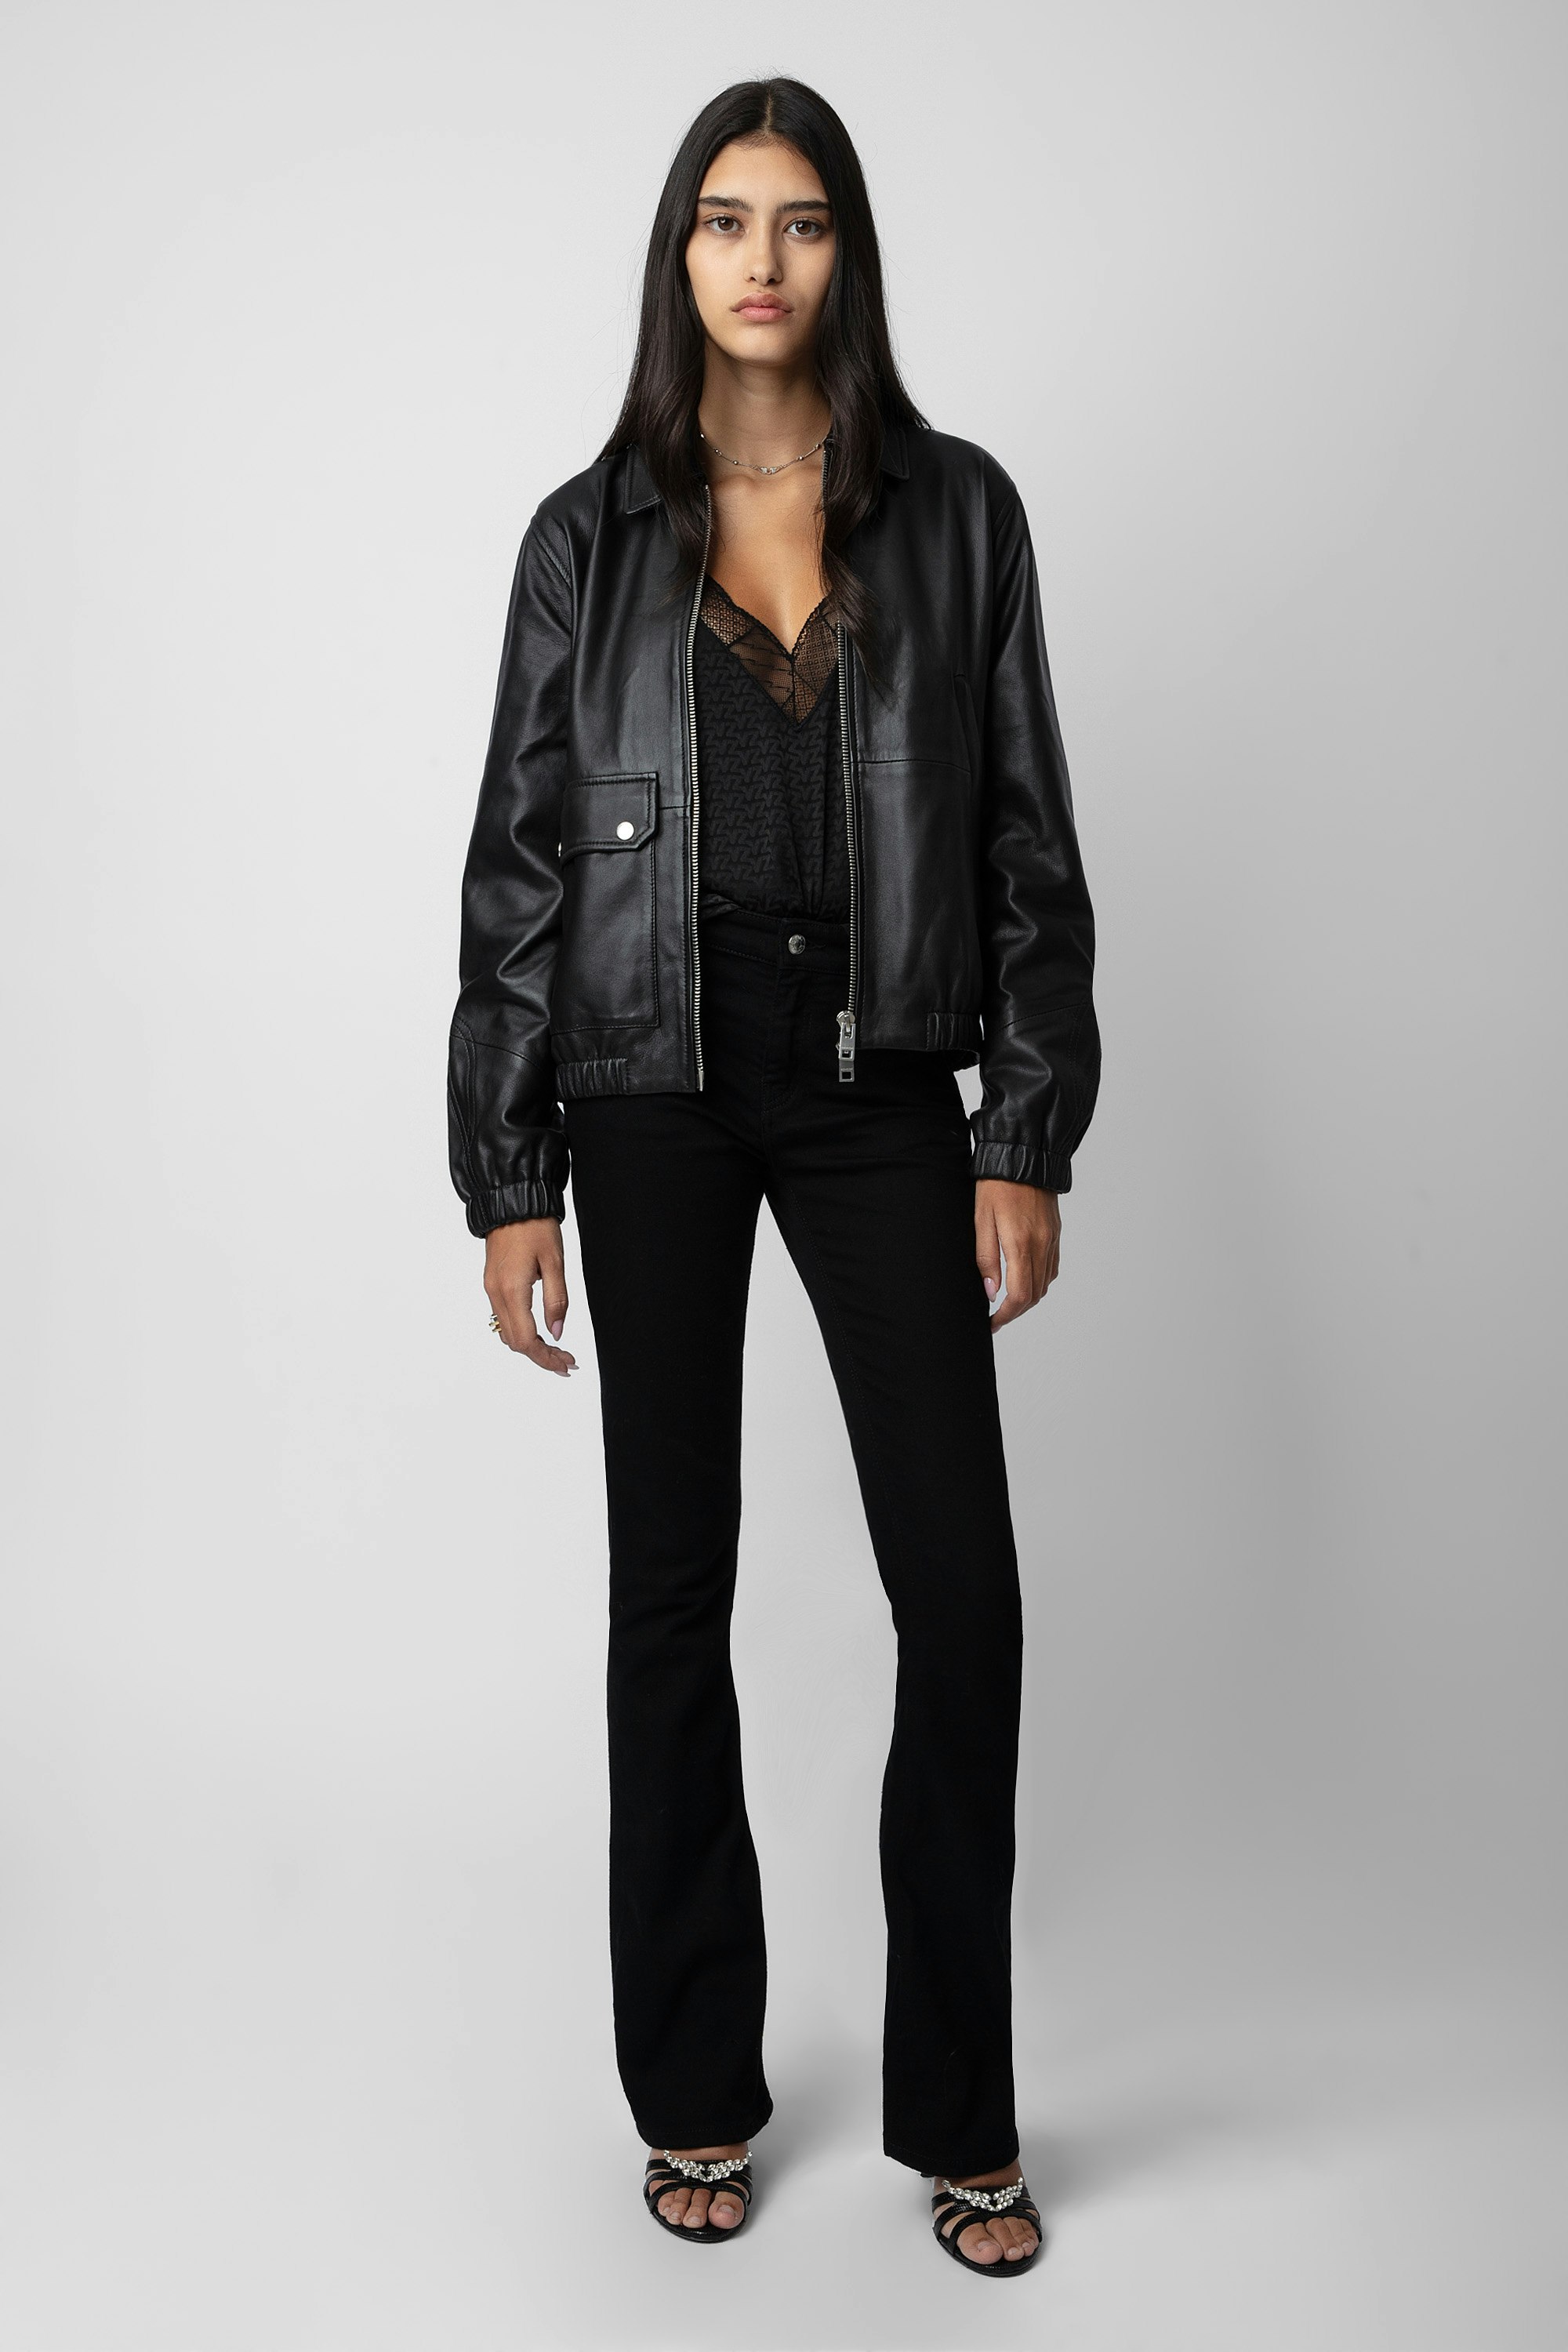 Lyssa Leather Jacket - Women’s black leather biker jacket with wings on the back.